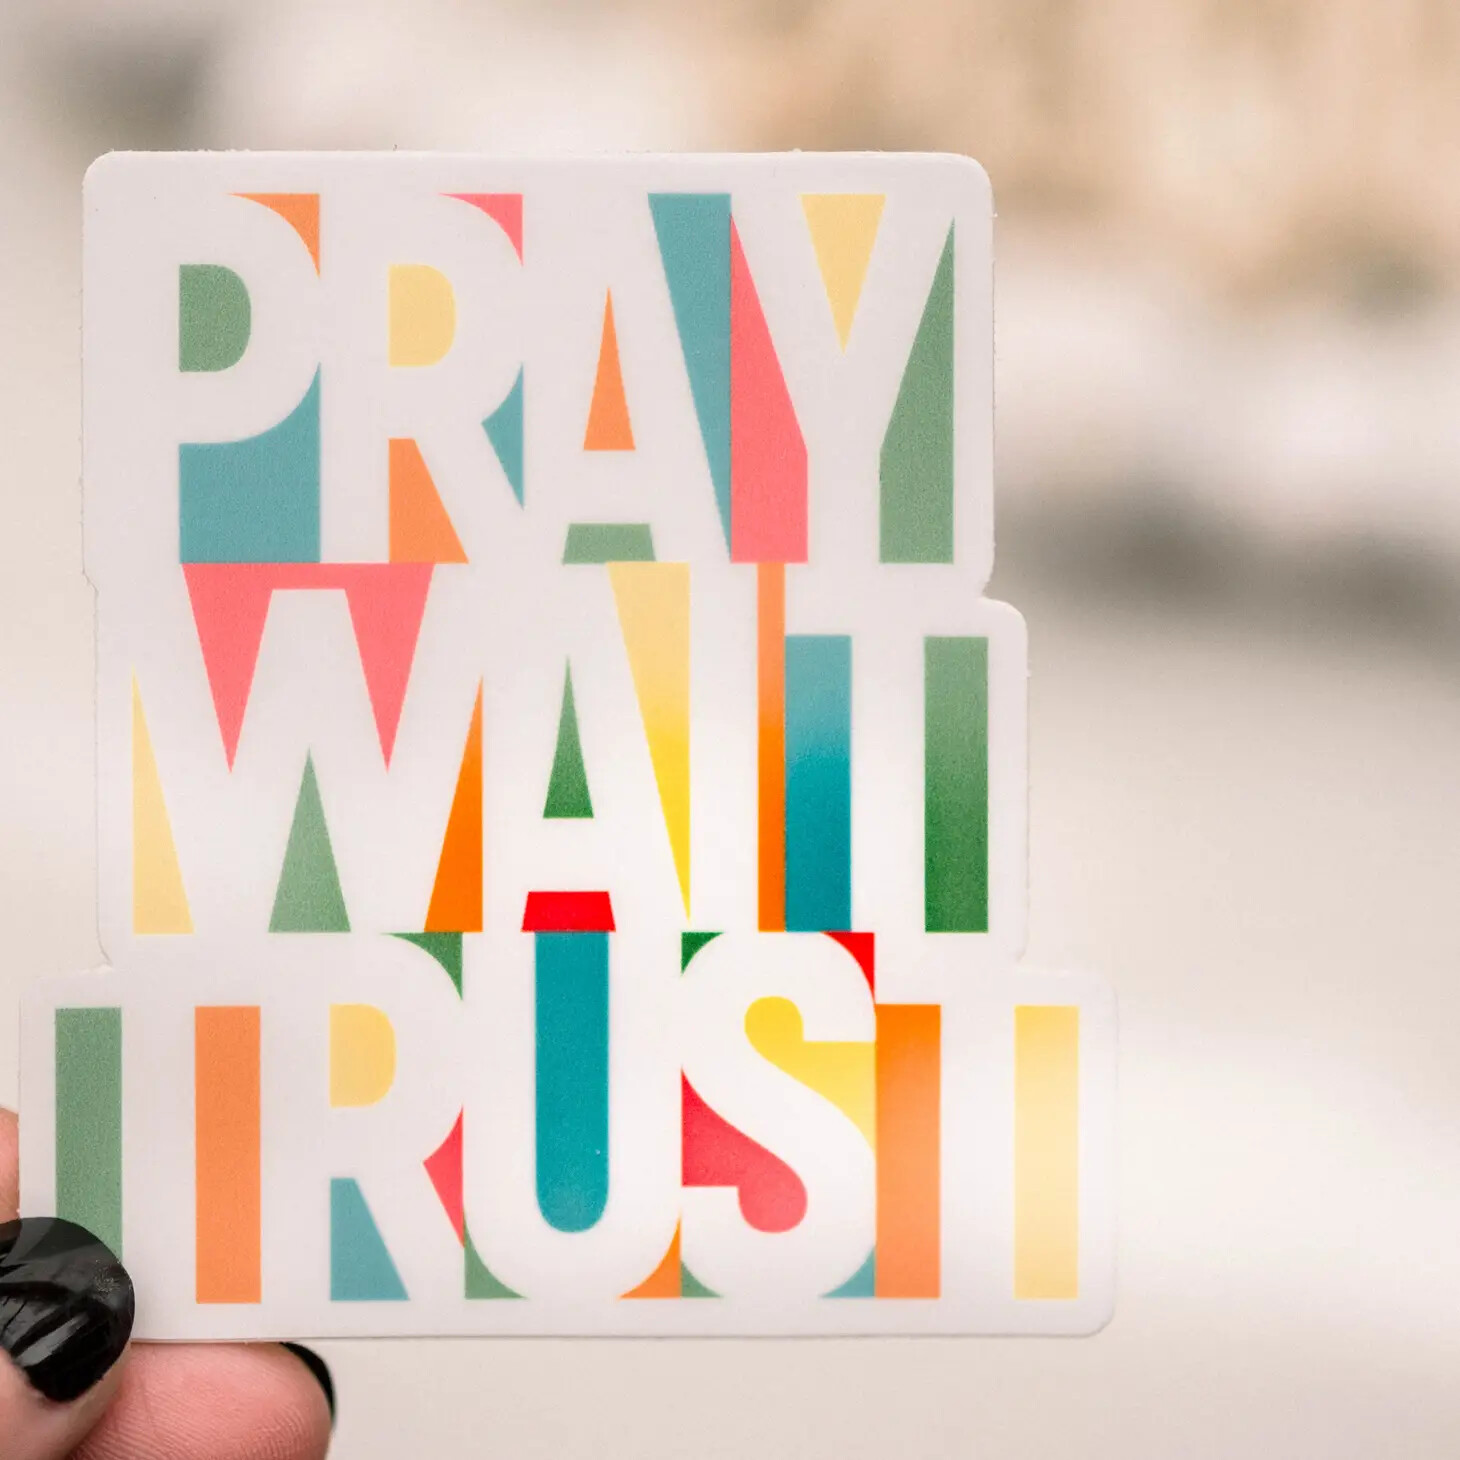 Pray Wait Trust Christian Vinyl Sticker, 3x3 in